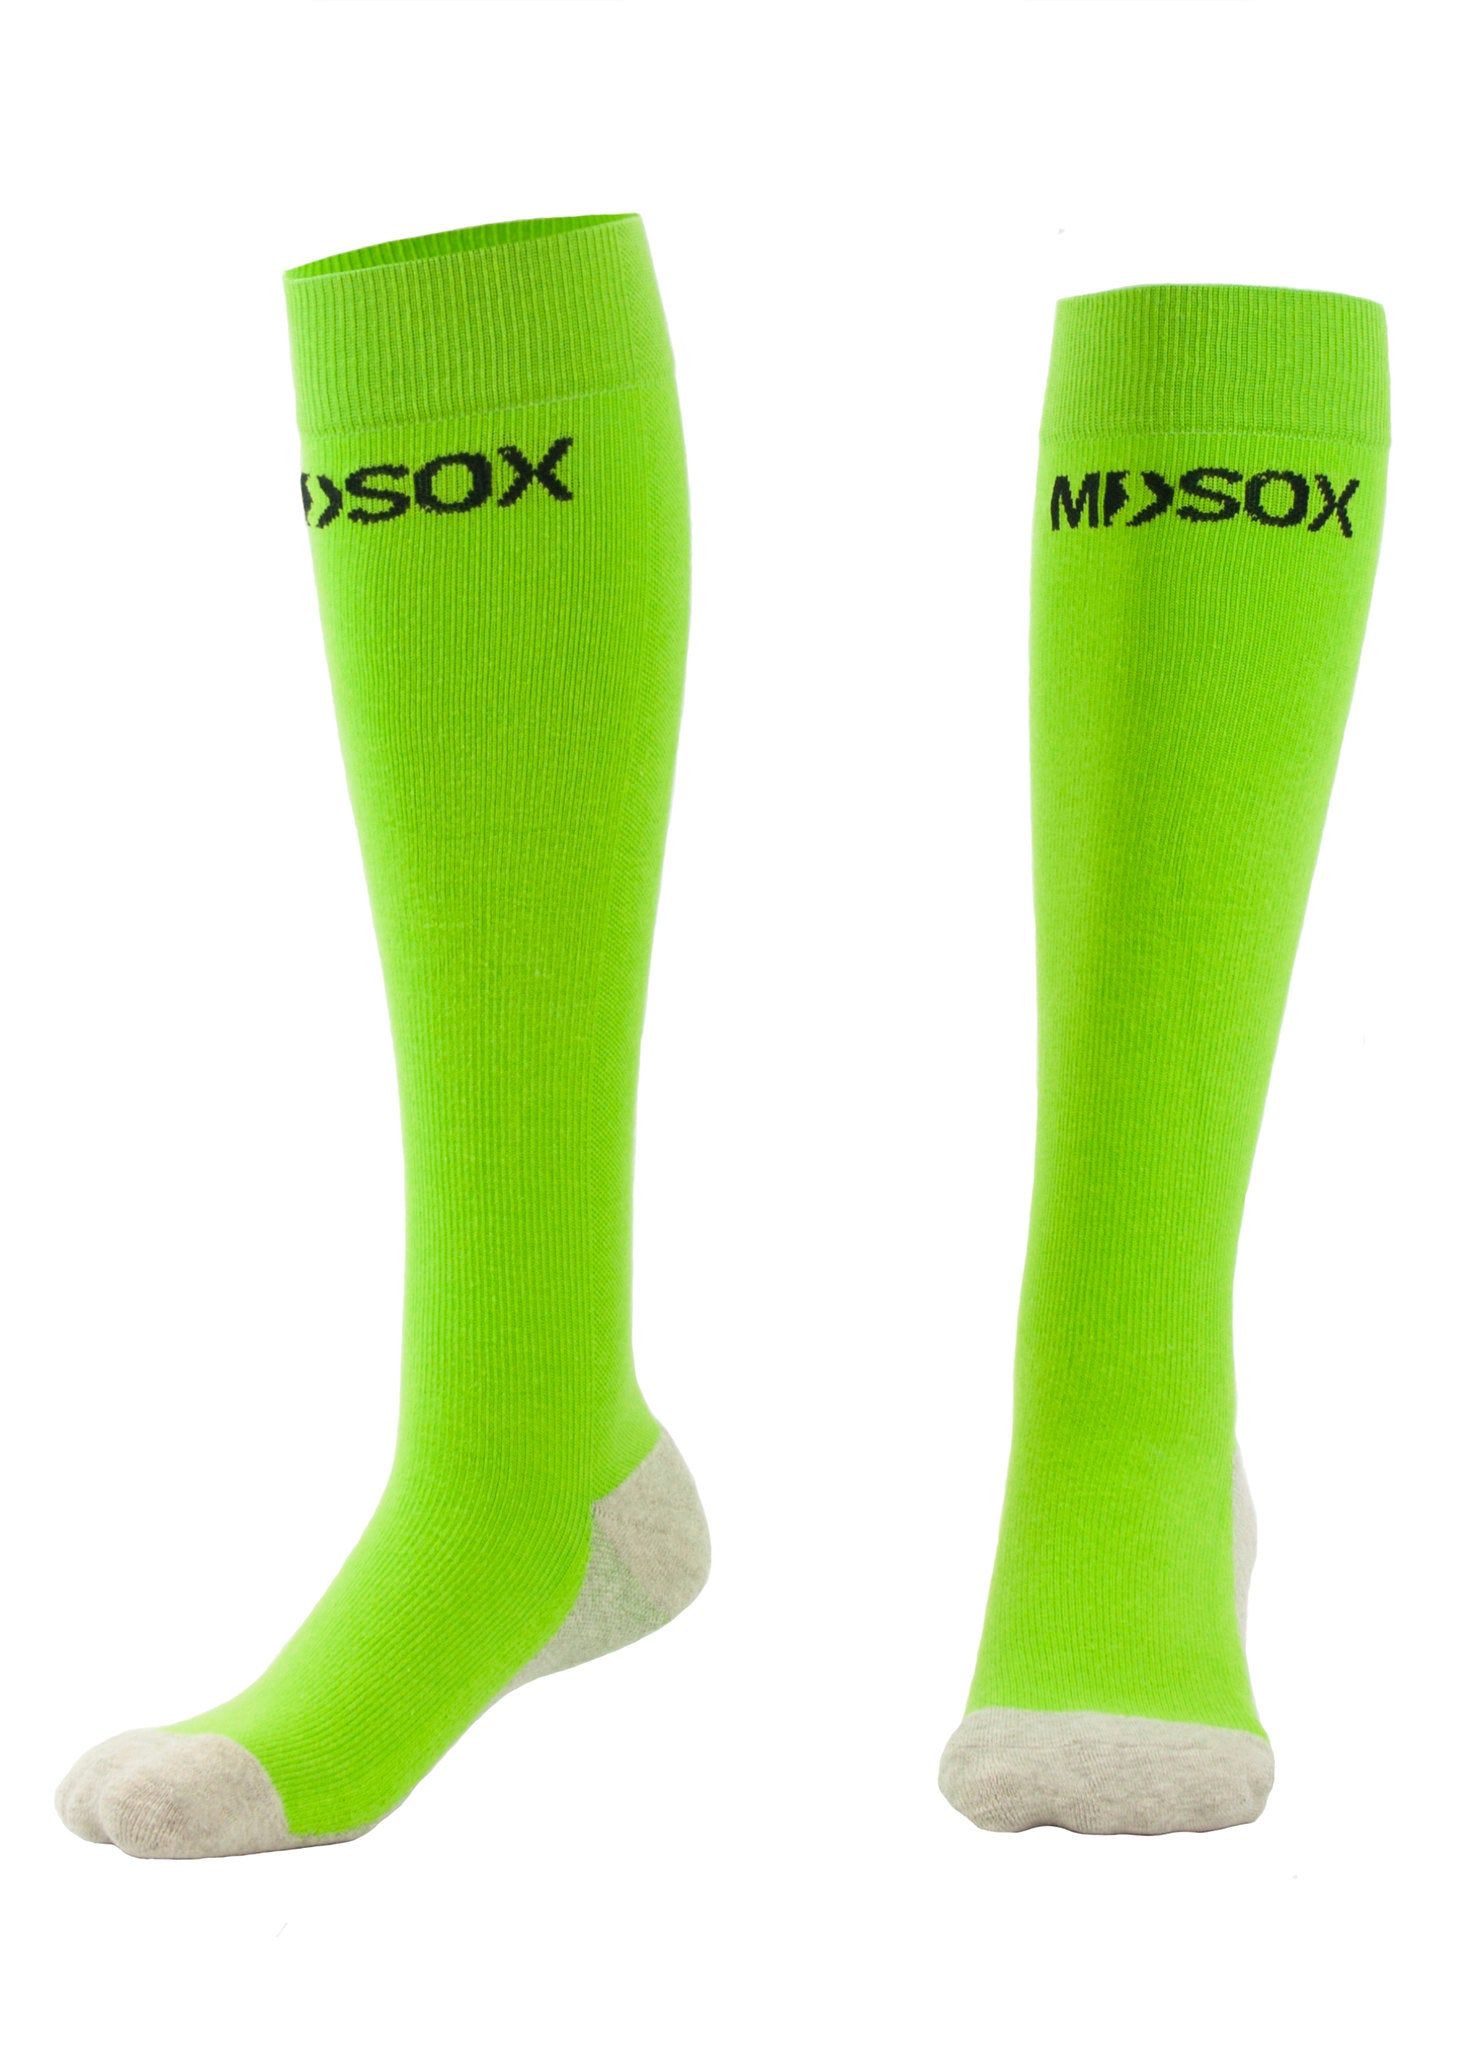 MDSOX 20-30mmHg Green